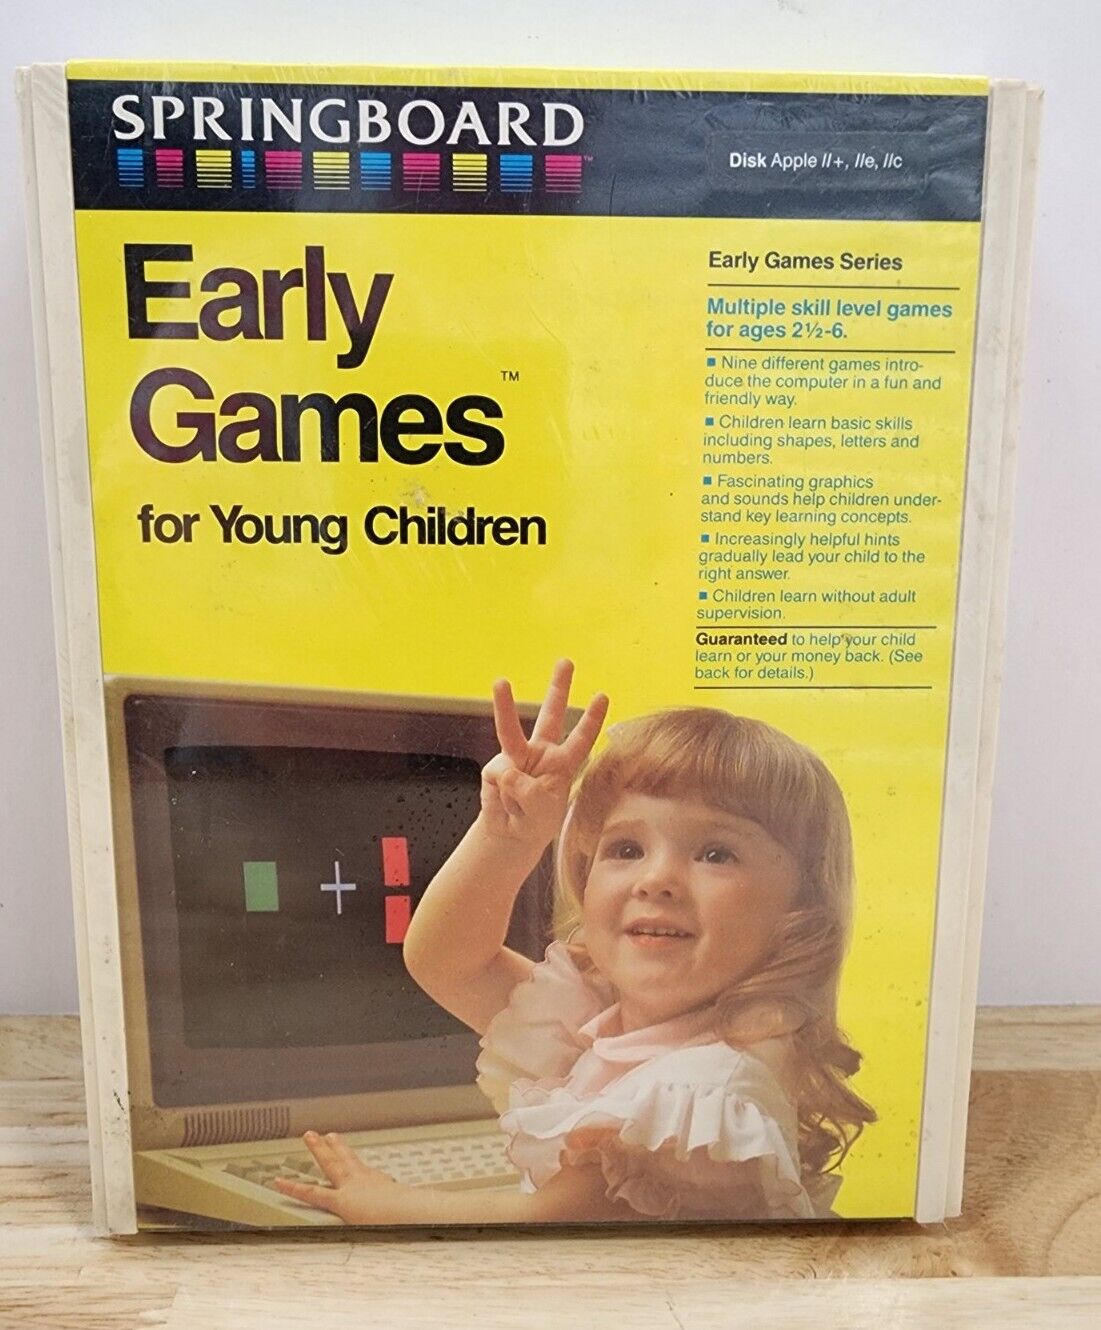 SEALED 1985 Springboard Early Games for Yong Children Disk Apple II+, IIe, IIc